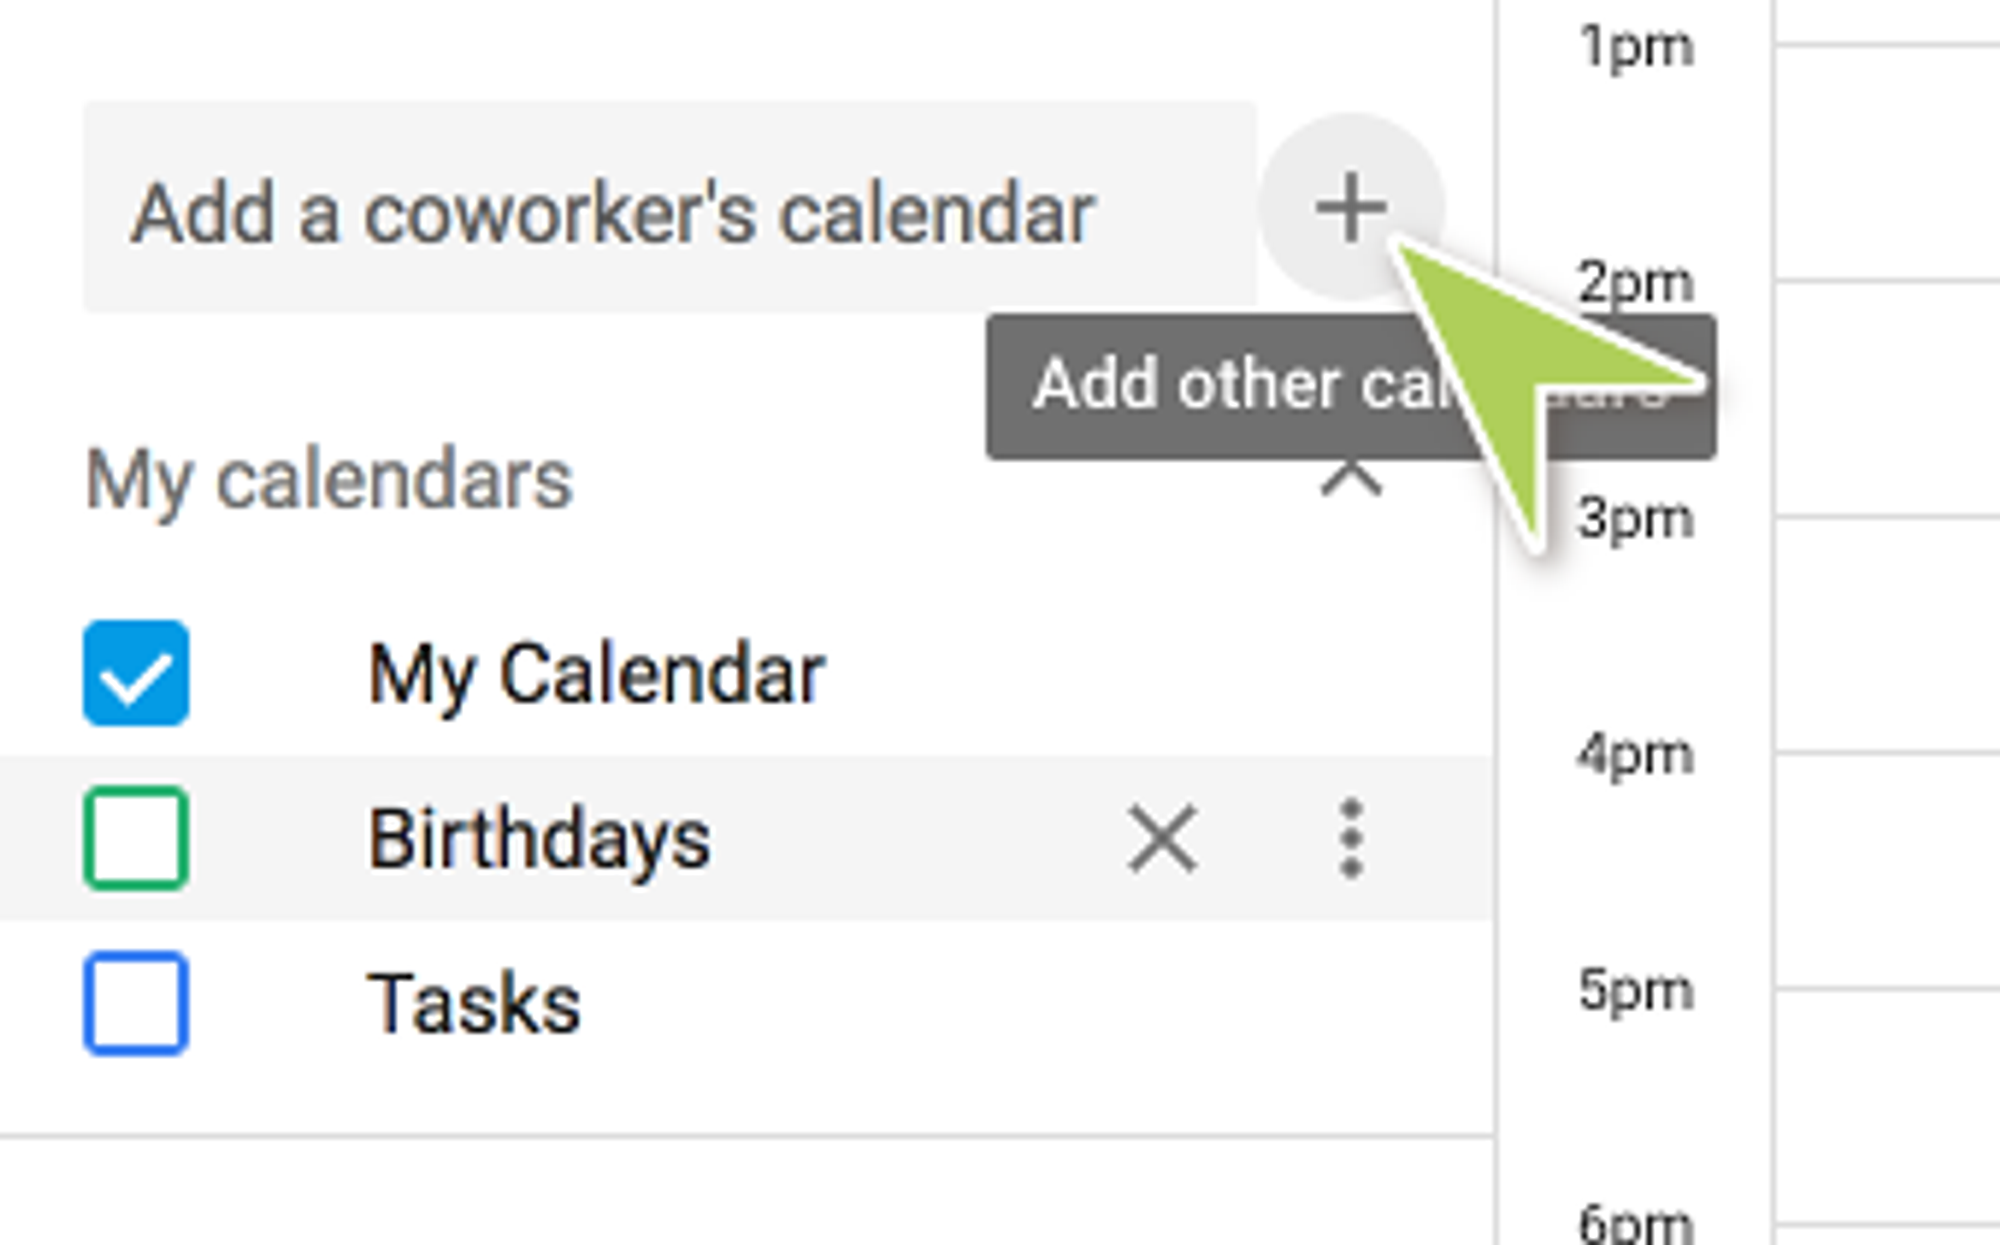 Click ‘Add other calendars’ button